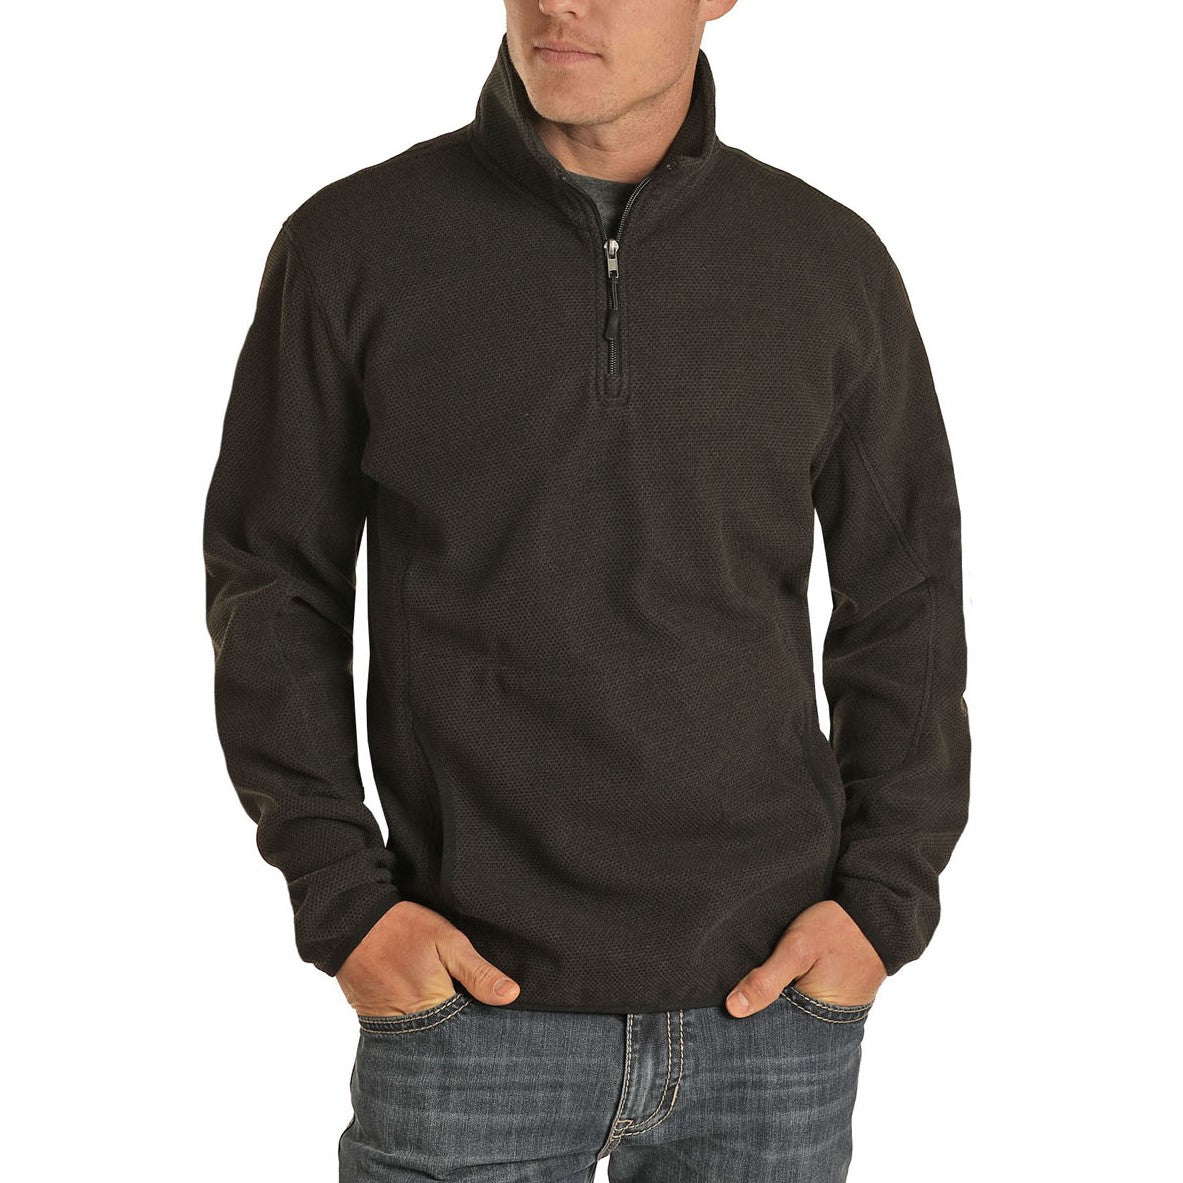 Powder River Outfitters® Men's Quarter Zip Black Pullover 91-1046-01